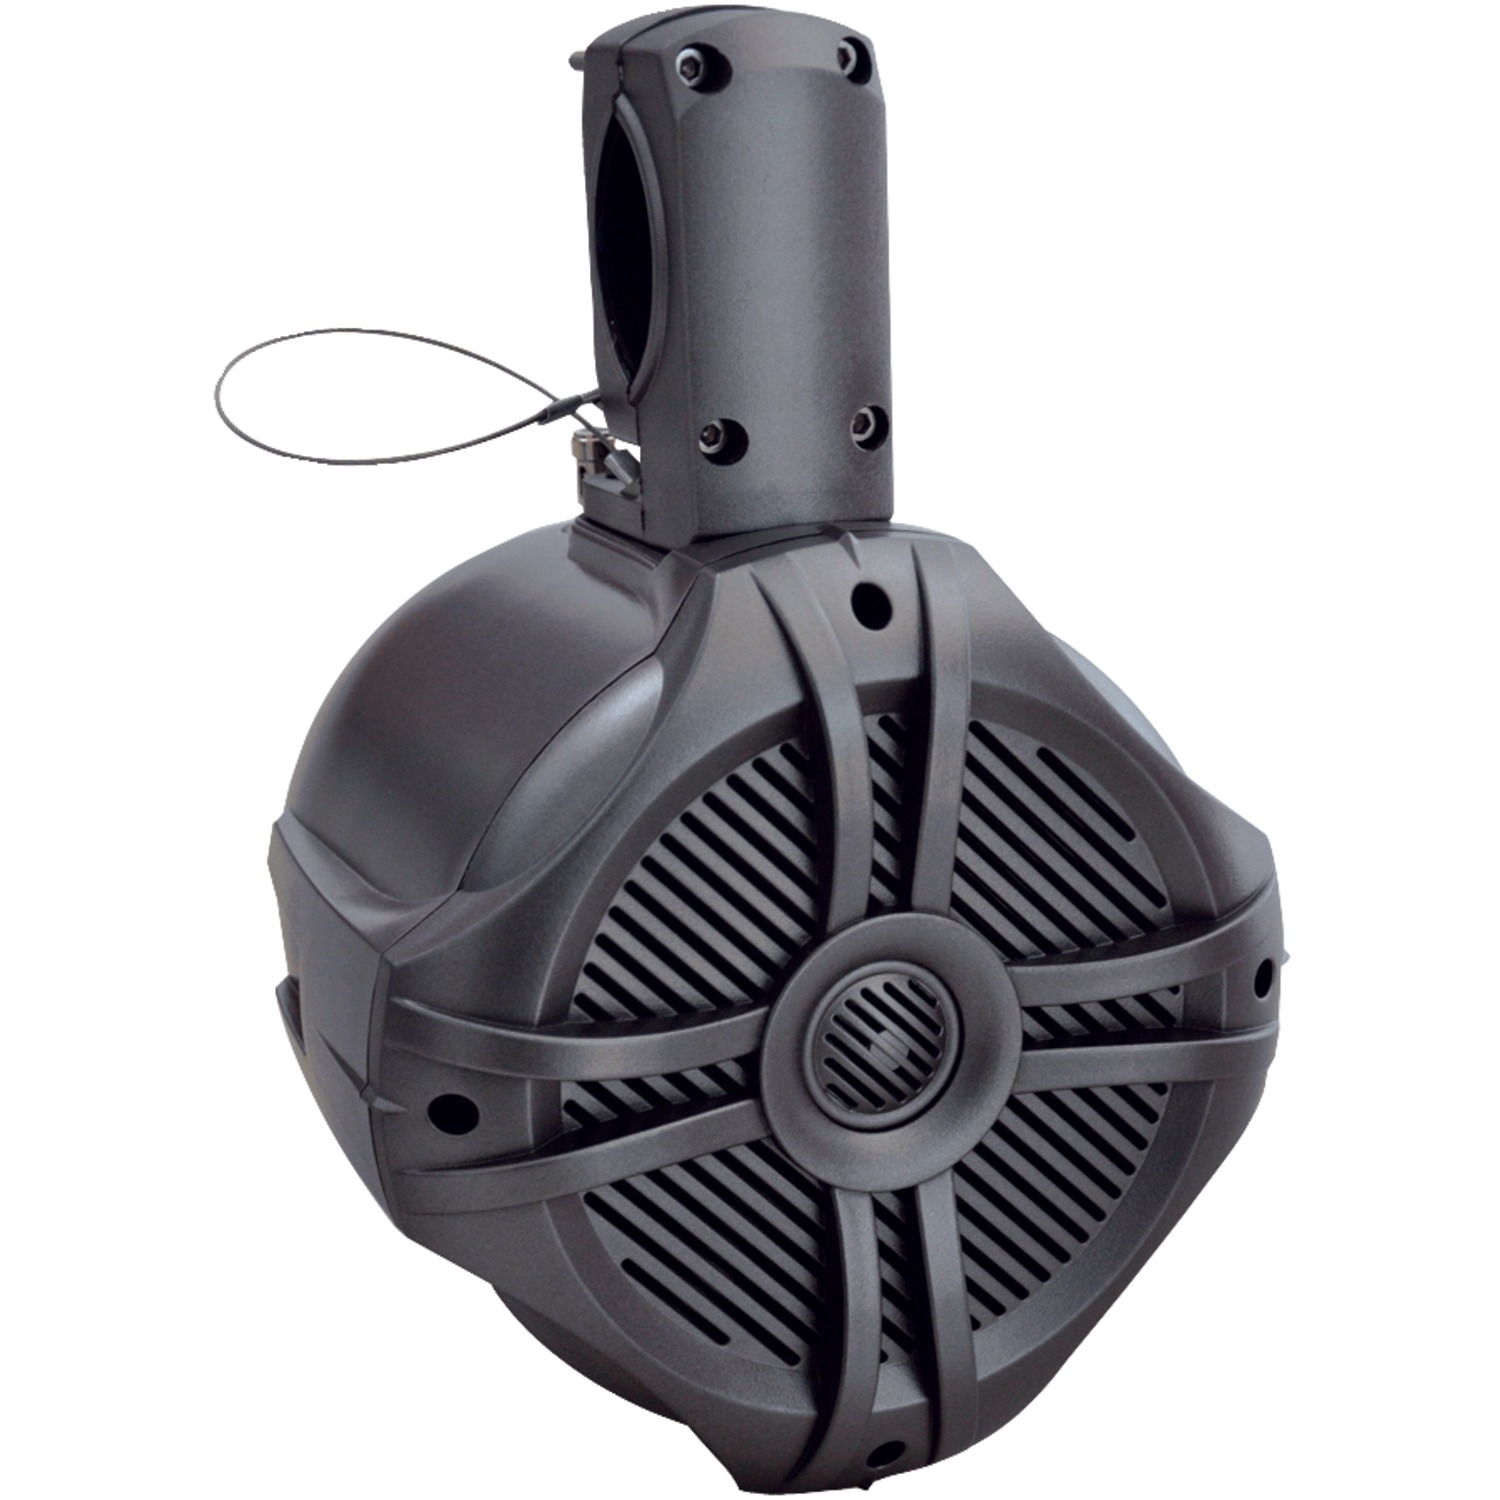 Acoustik® Mwt-80t Marine-grade 8" 750-watt Wake Tower Enclosure & Speaker System (titanium) - image 2 of 2